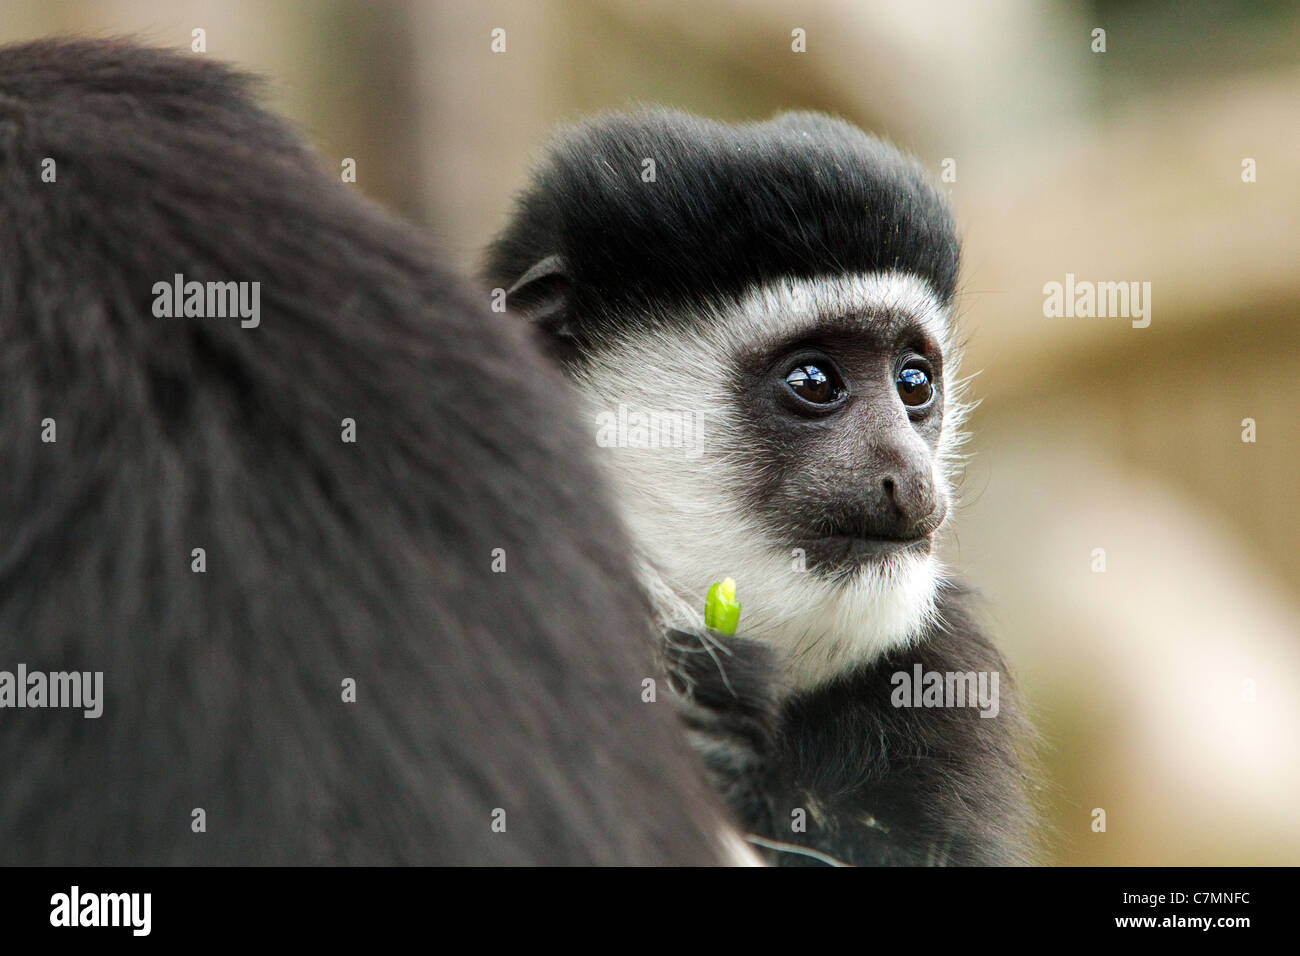 A baby Black and white colobus monkey. Stock Photo